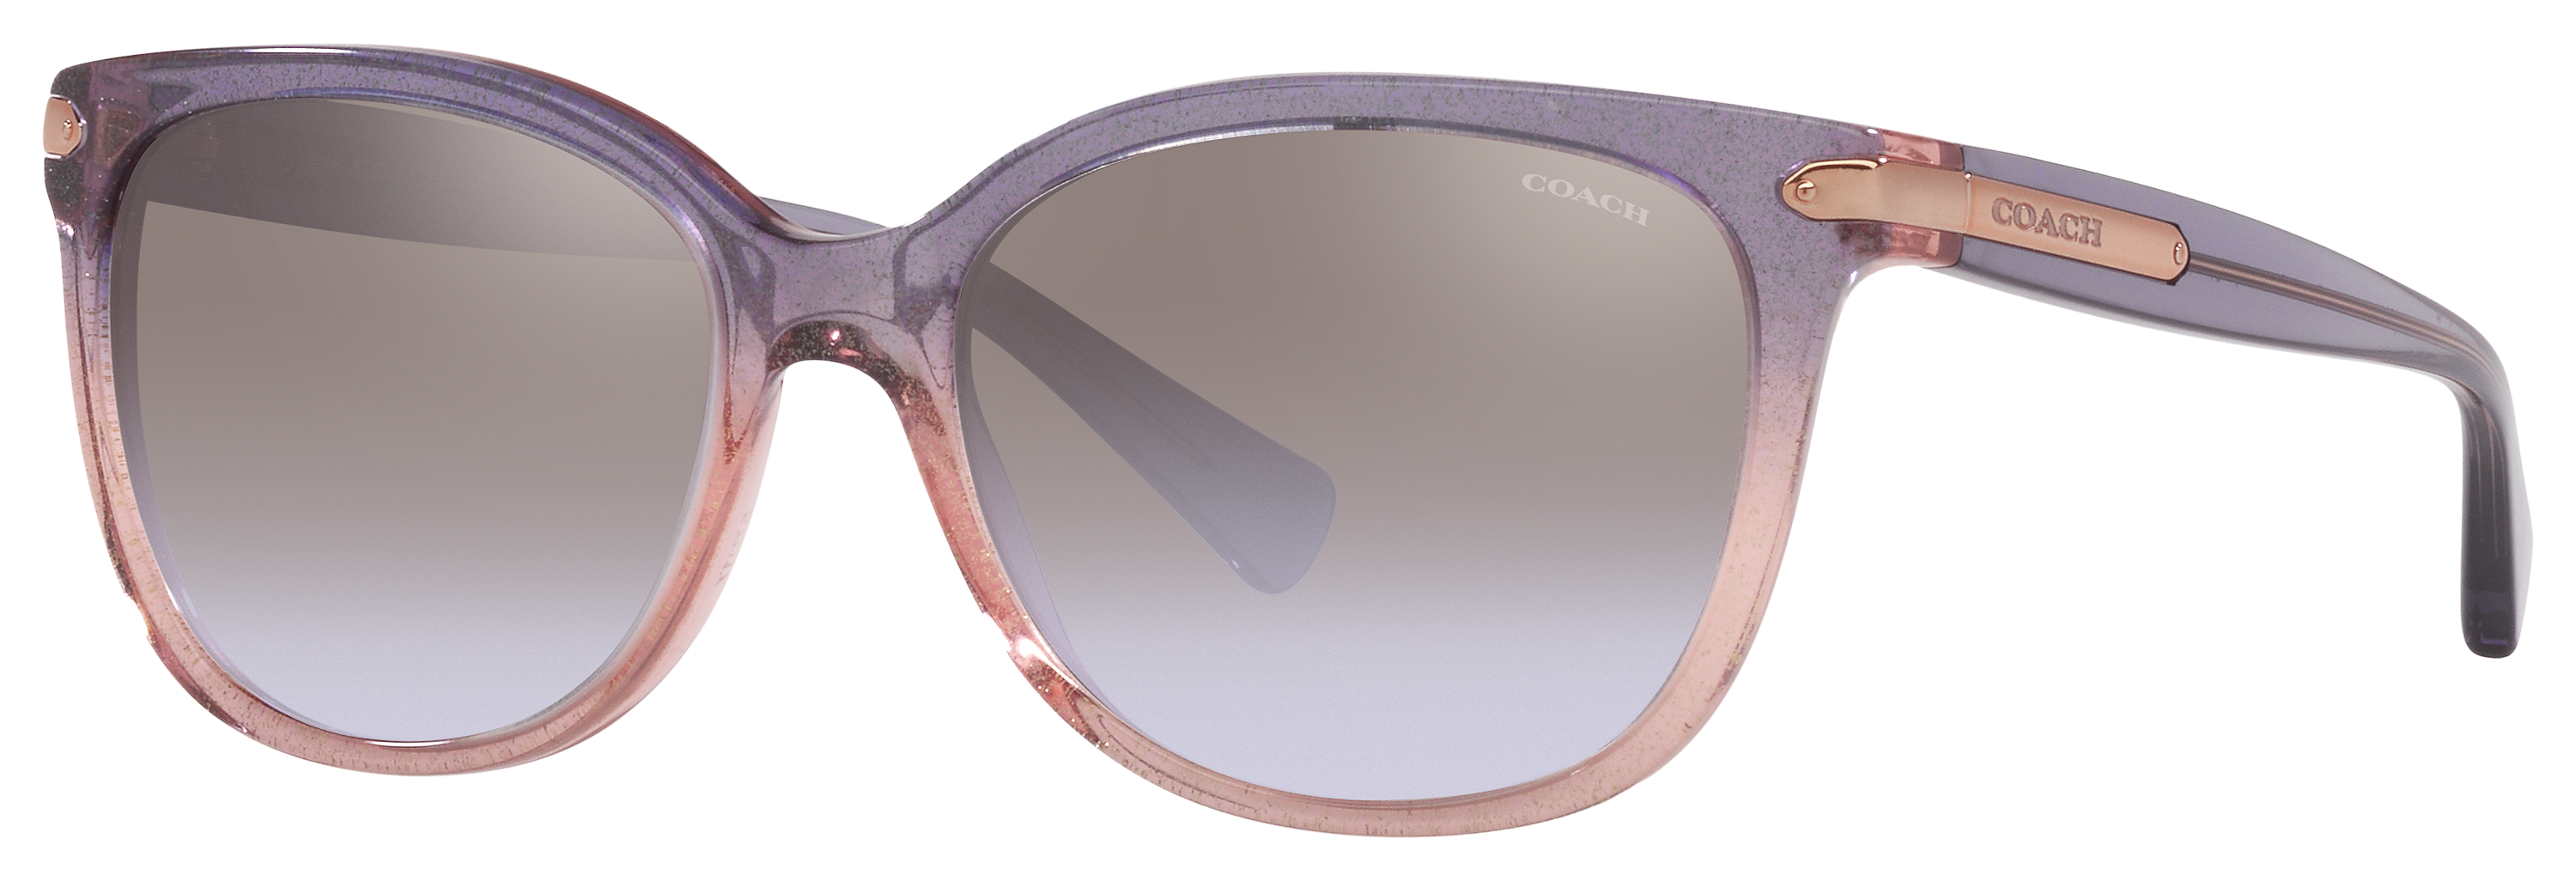 Coach HC8132 Sunglasses for Ladies - Shimmer Violet Peach Gradient/Violet Gradient Flash Mirror - Large